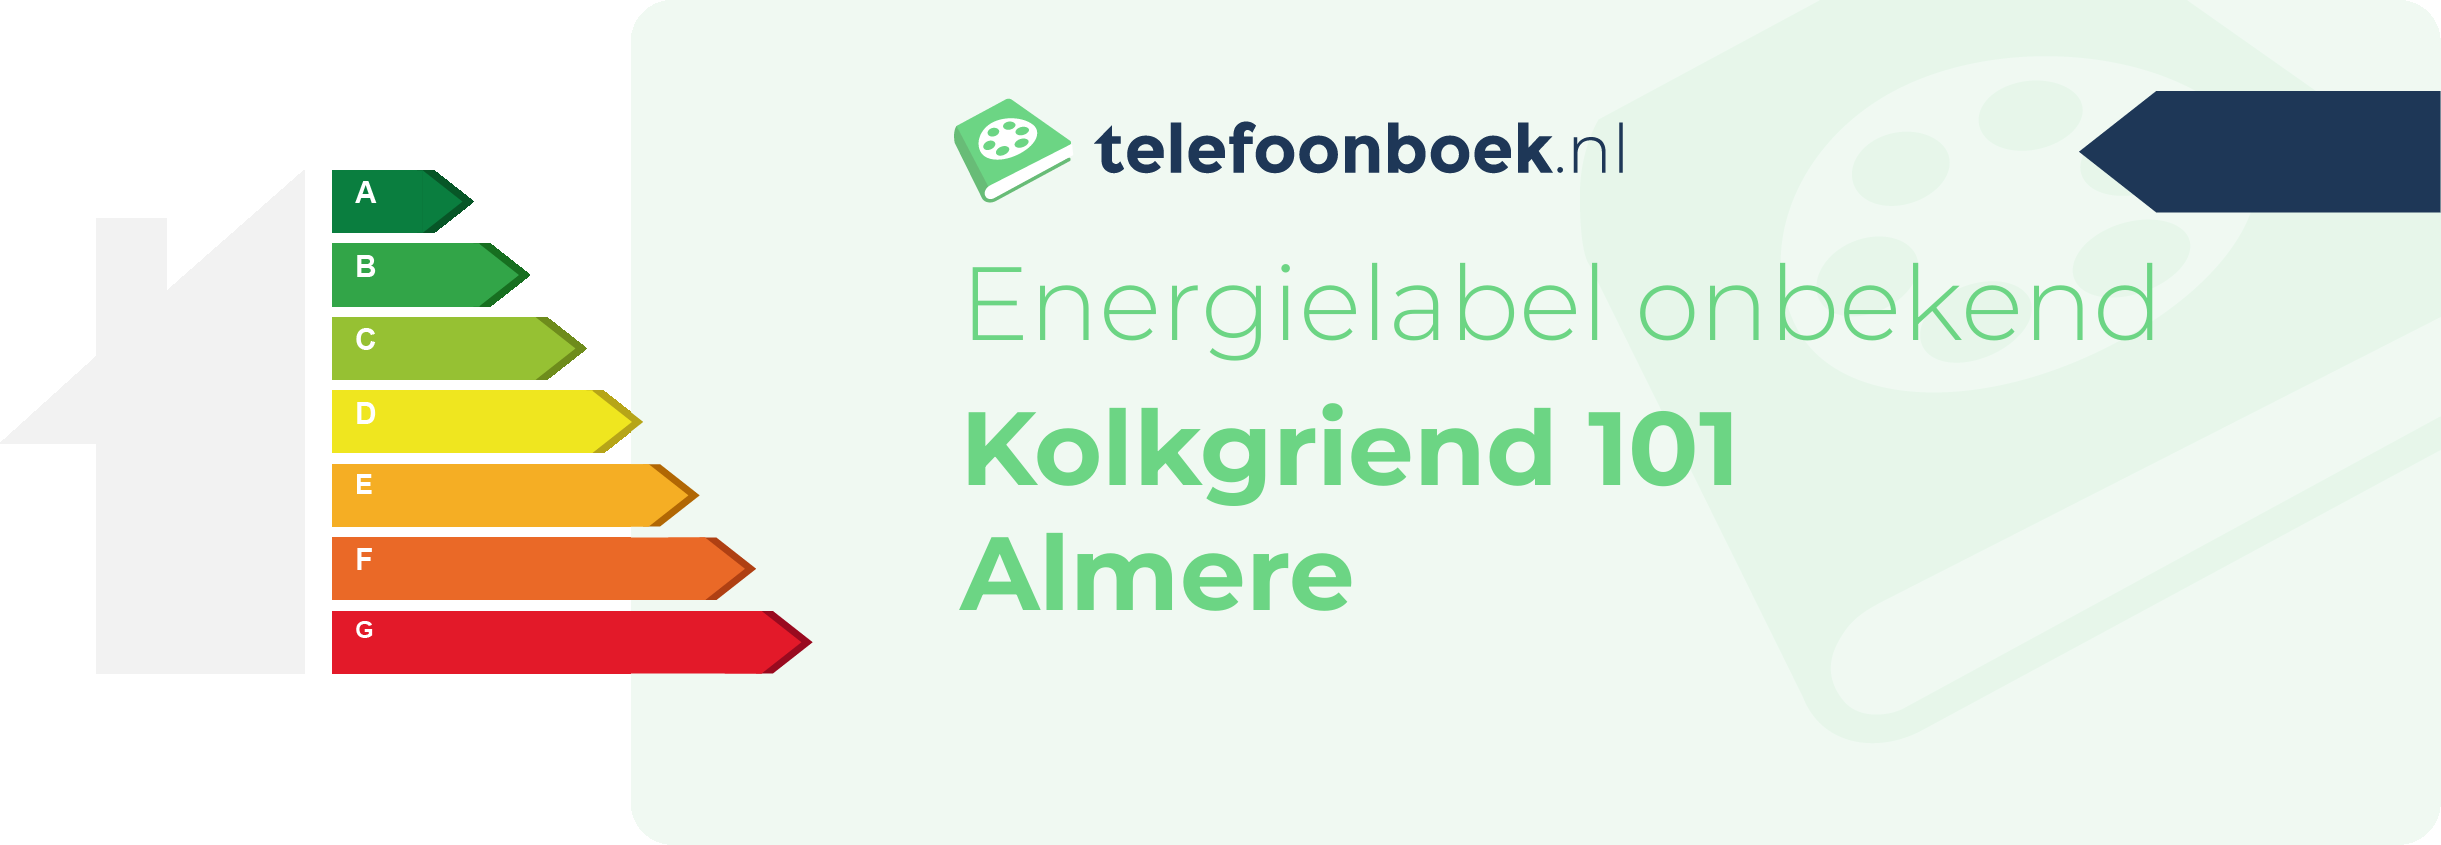 Energielabel Kolkgriend 101 Almere